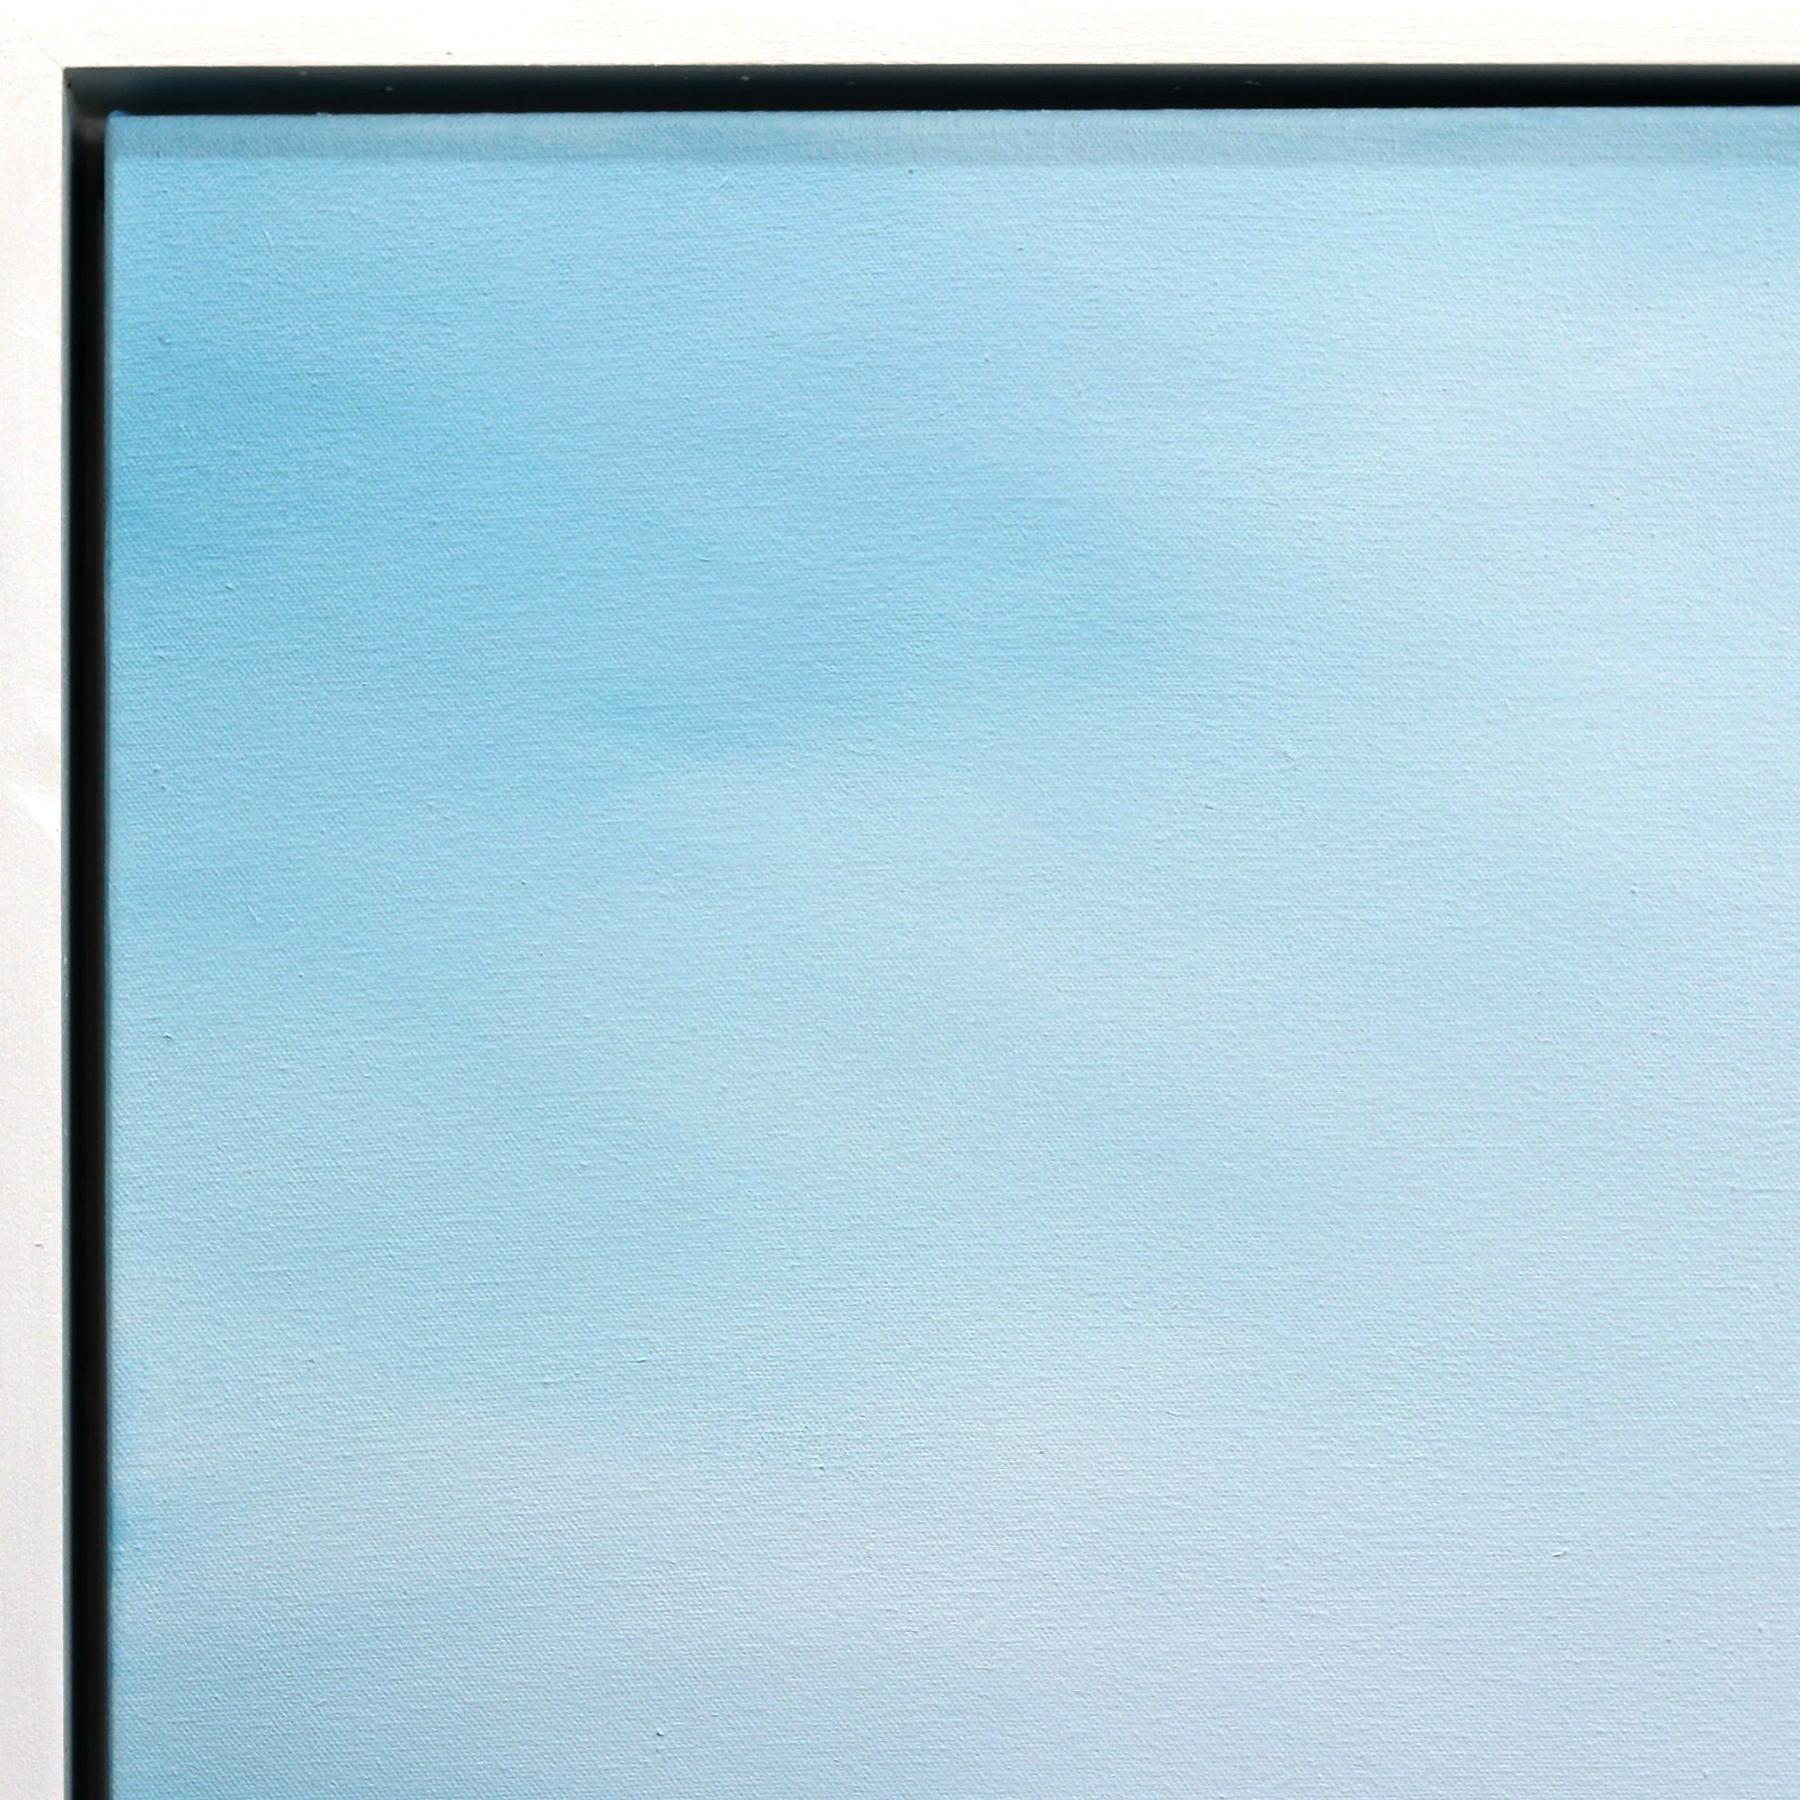 Untitled No. 762 - Framed Contemporary Minimalist Blue Landscape Ocean Artwork For Sale 6